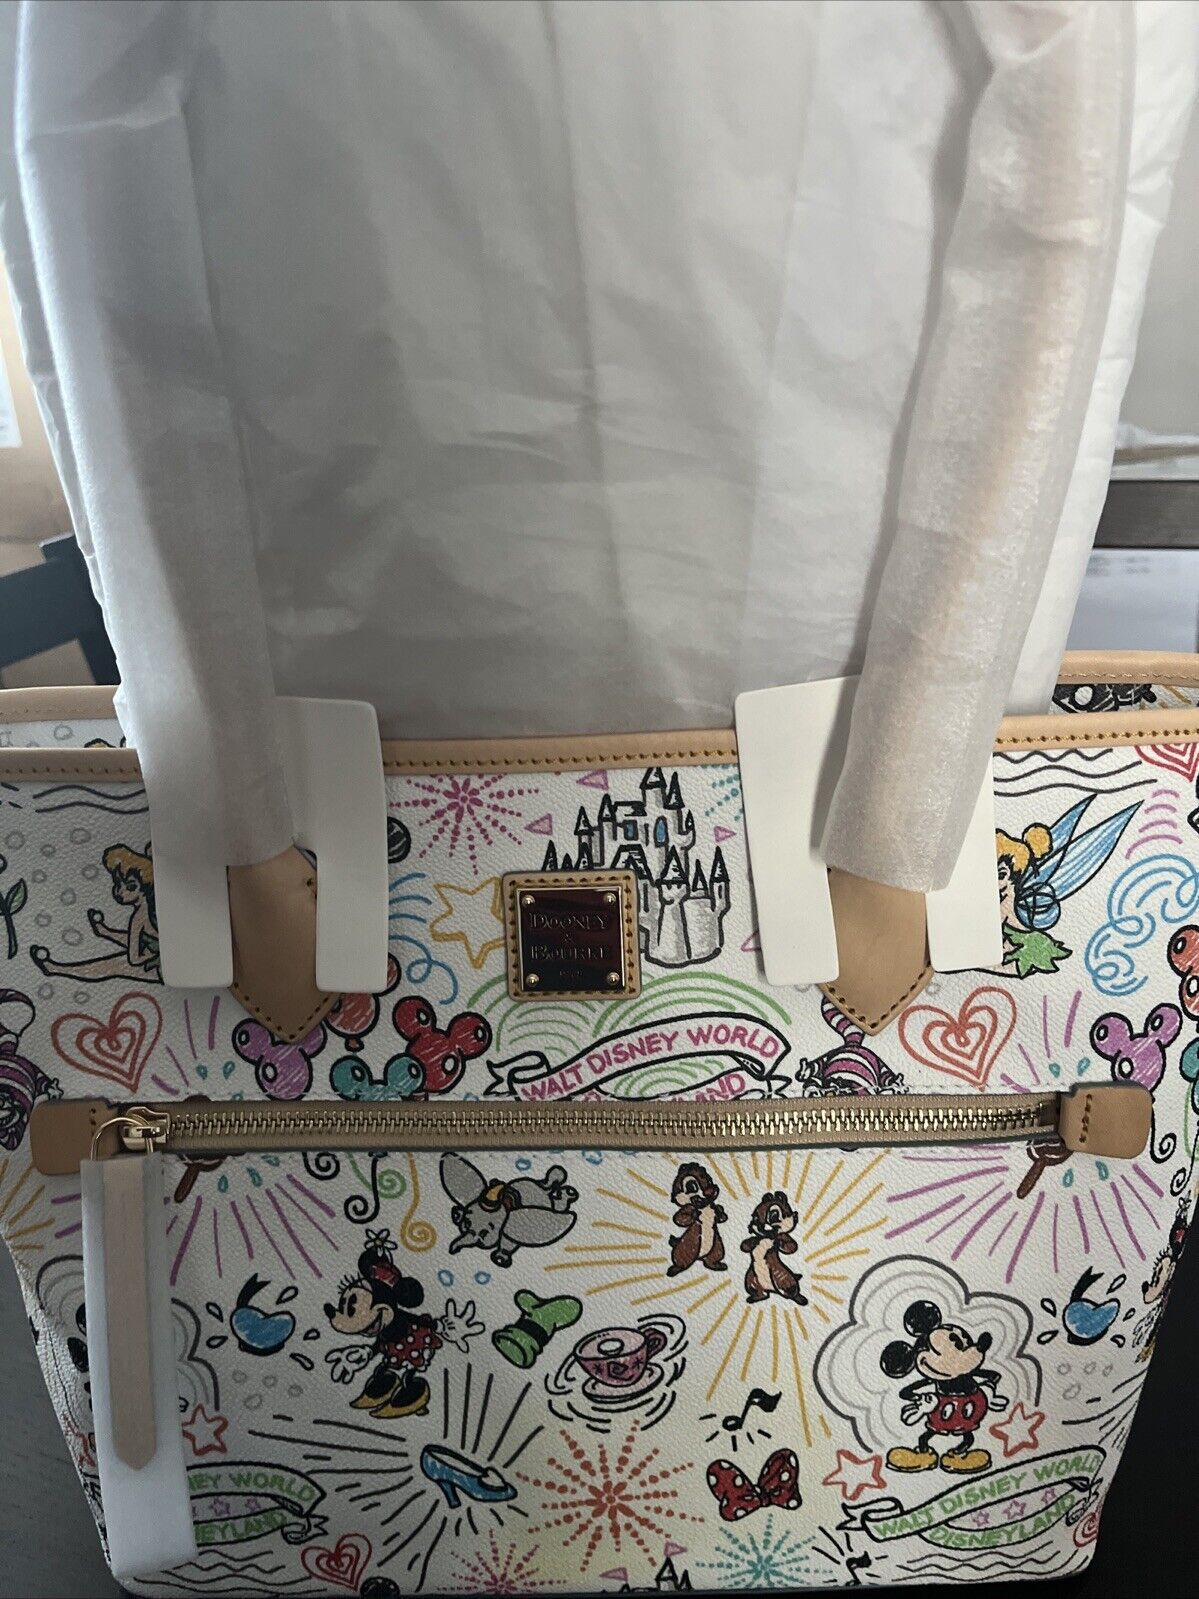 Disney Parks Sketch Mickey Minnie Dooney & Bourke Tote Bag New With Tags